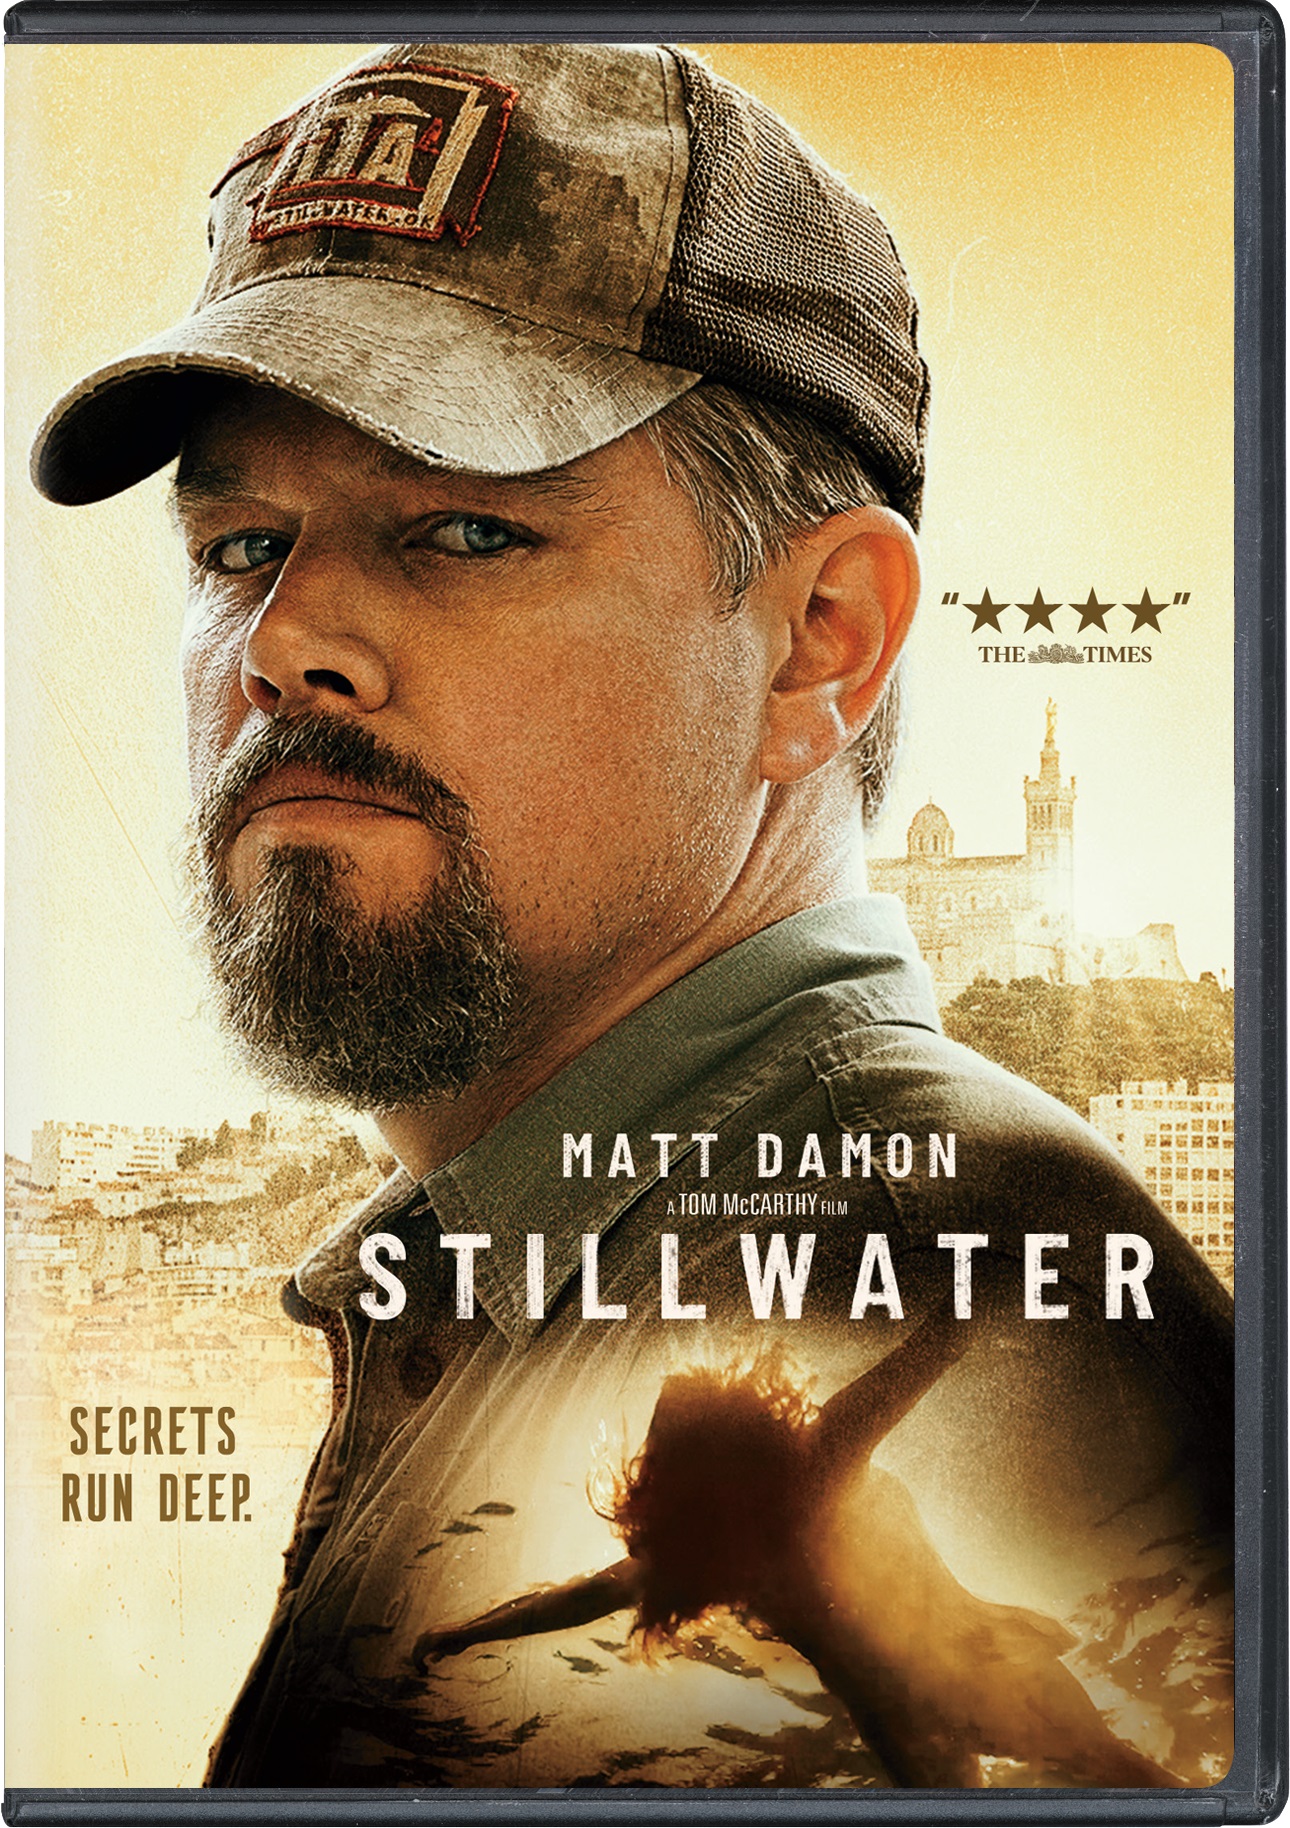 Stillwater - DVD [ 2021 ]  - Drama Movies On DVD - Movies On GRUV